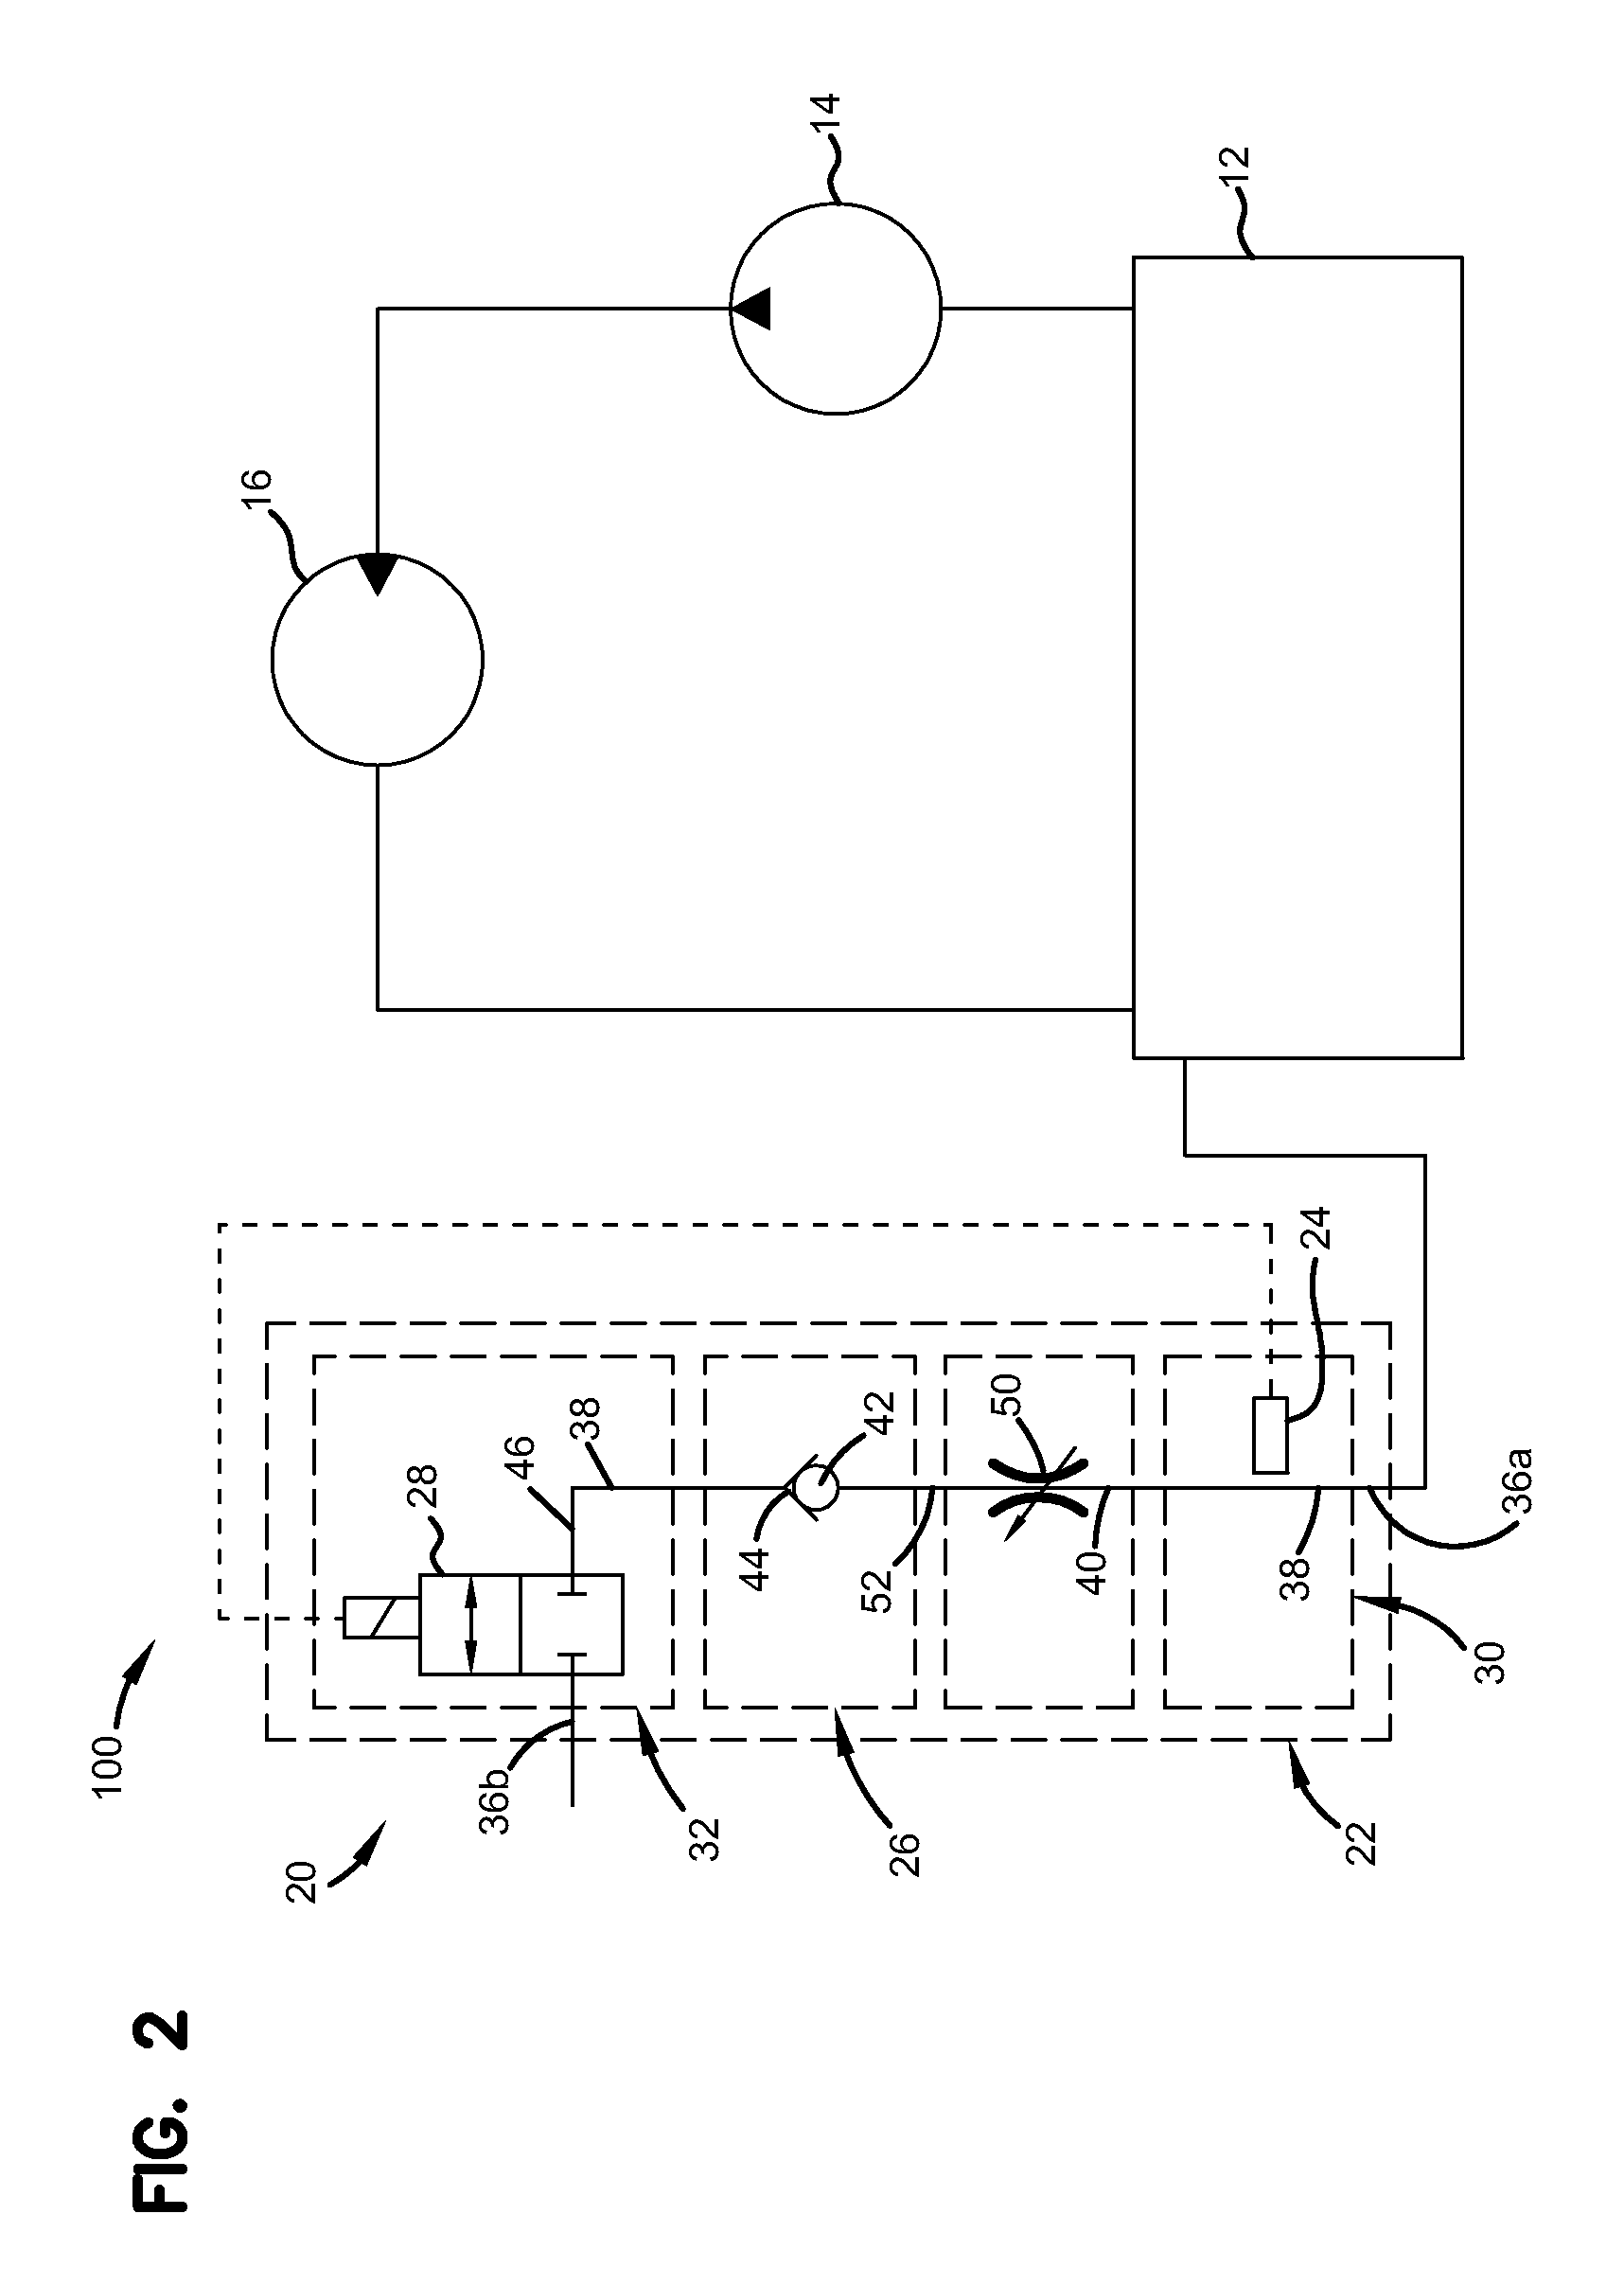 Air bleed valve float arrangement with restrictor